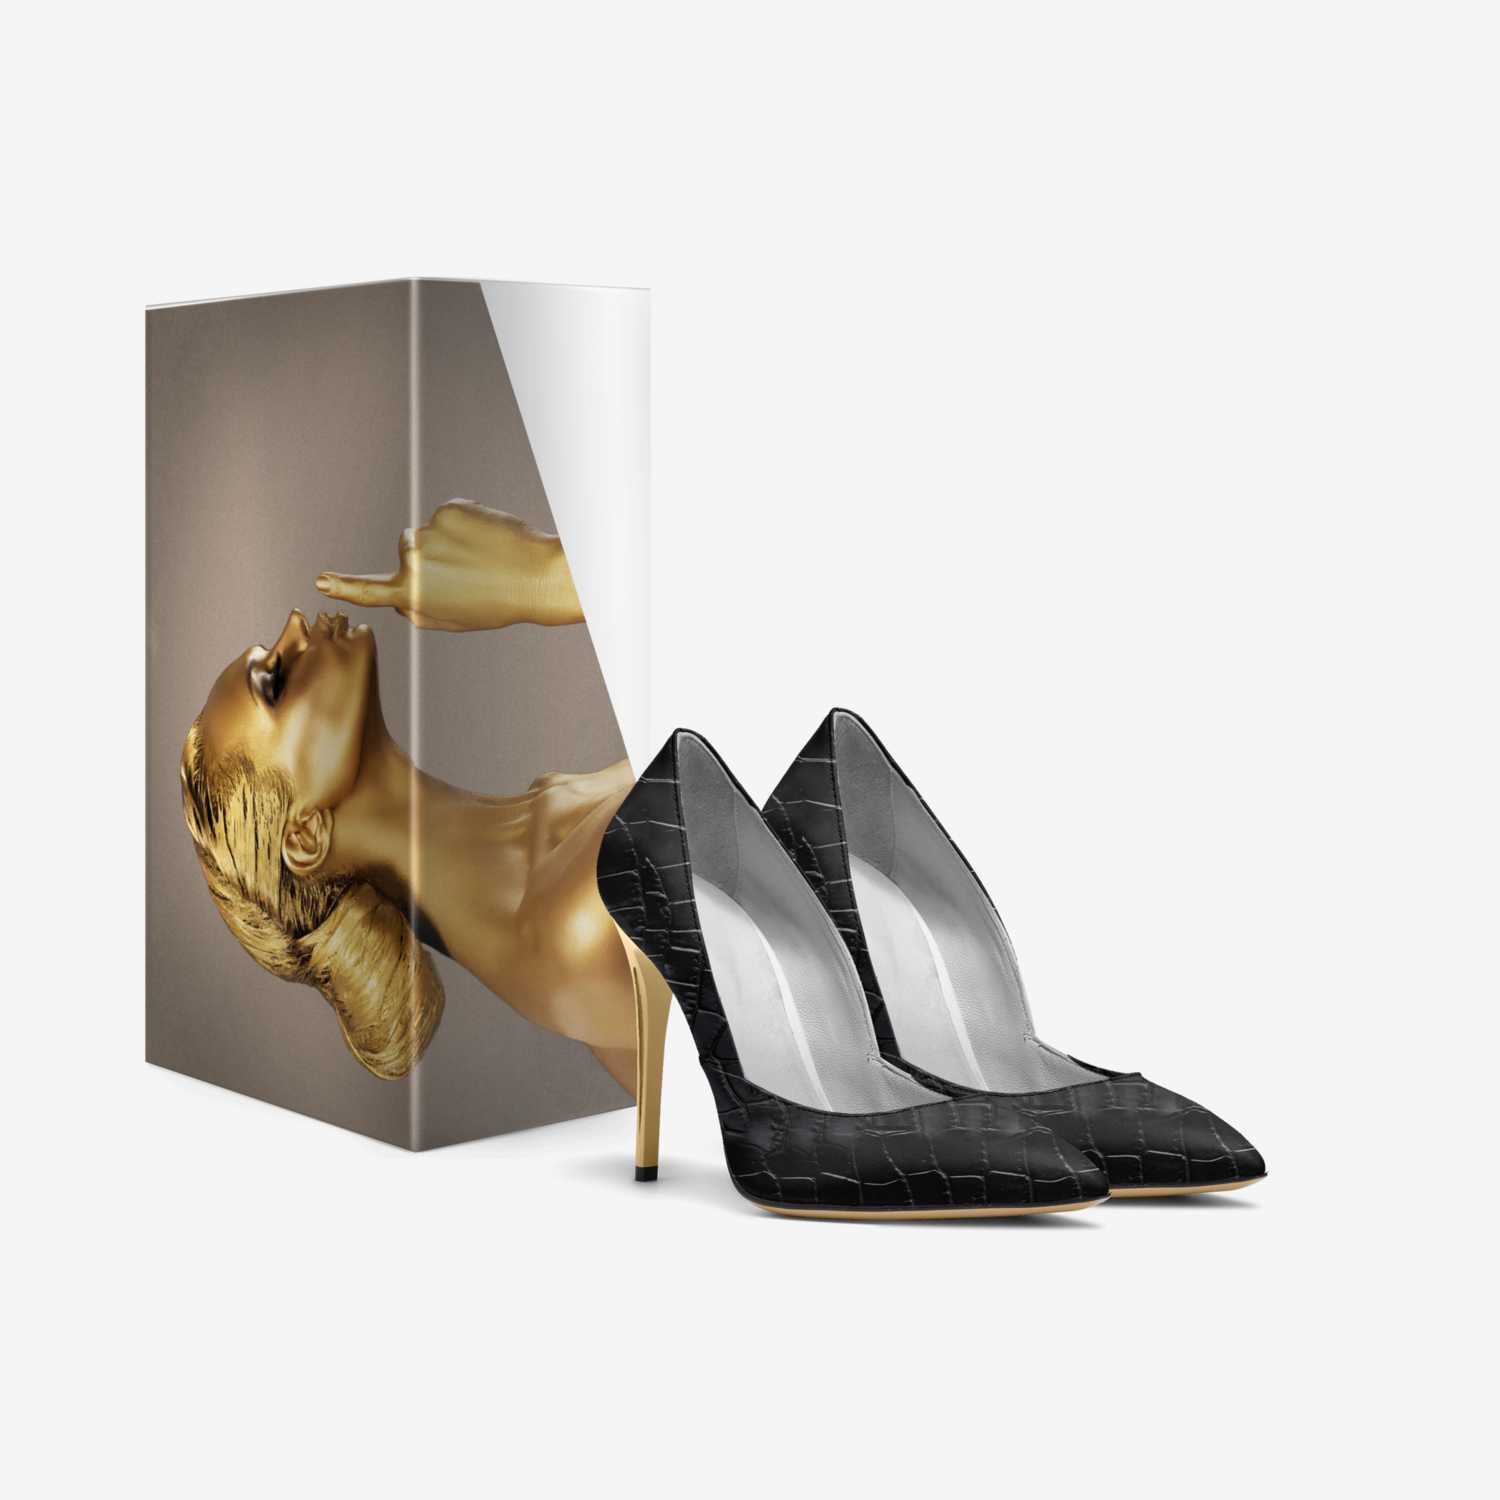 Lariba custom made in Italy shoes by Abigail Awuni | Box view